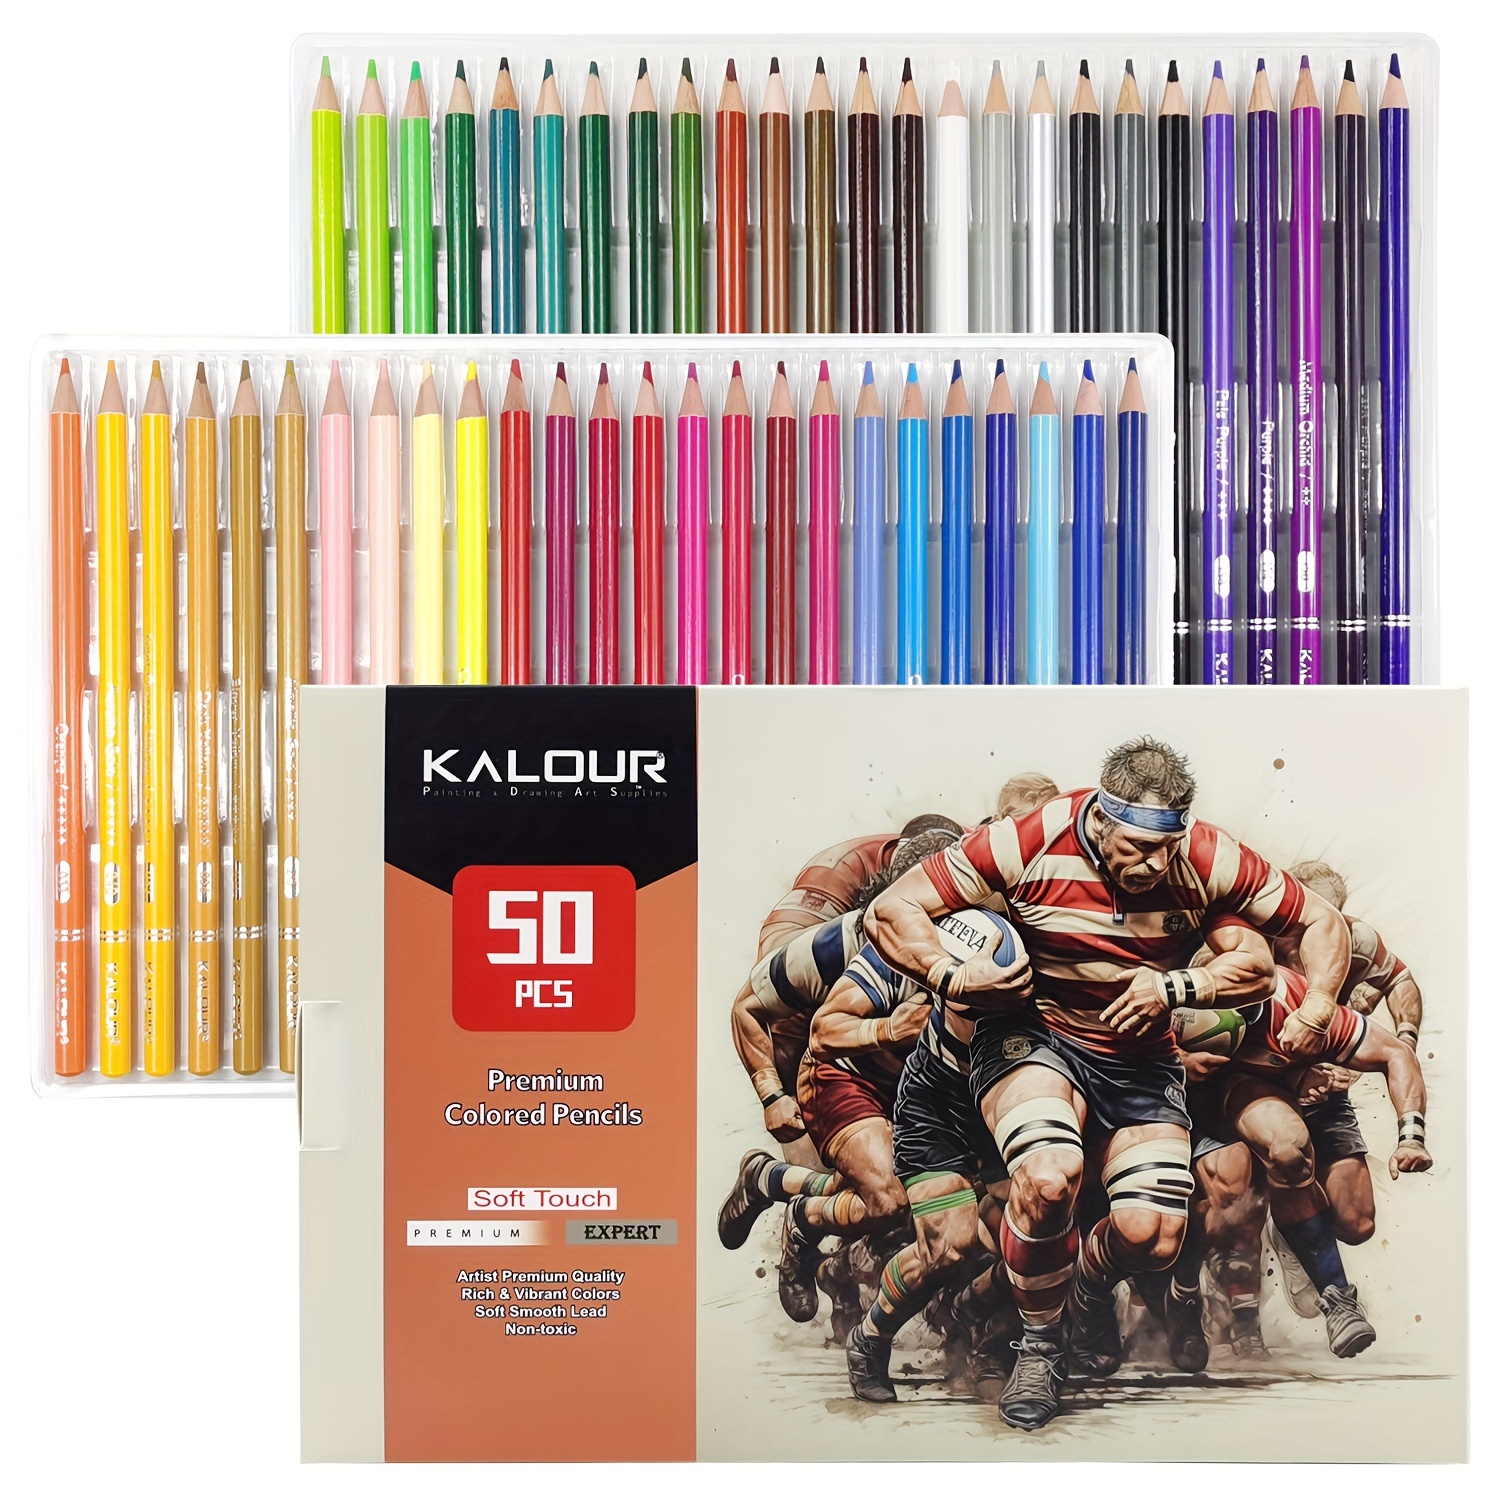 KALOUR Lápices de colores profesionales, juego de 300 colores, núcleo suave  para artistas con colores vibrantes, ideal para dibujar bocetos